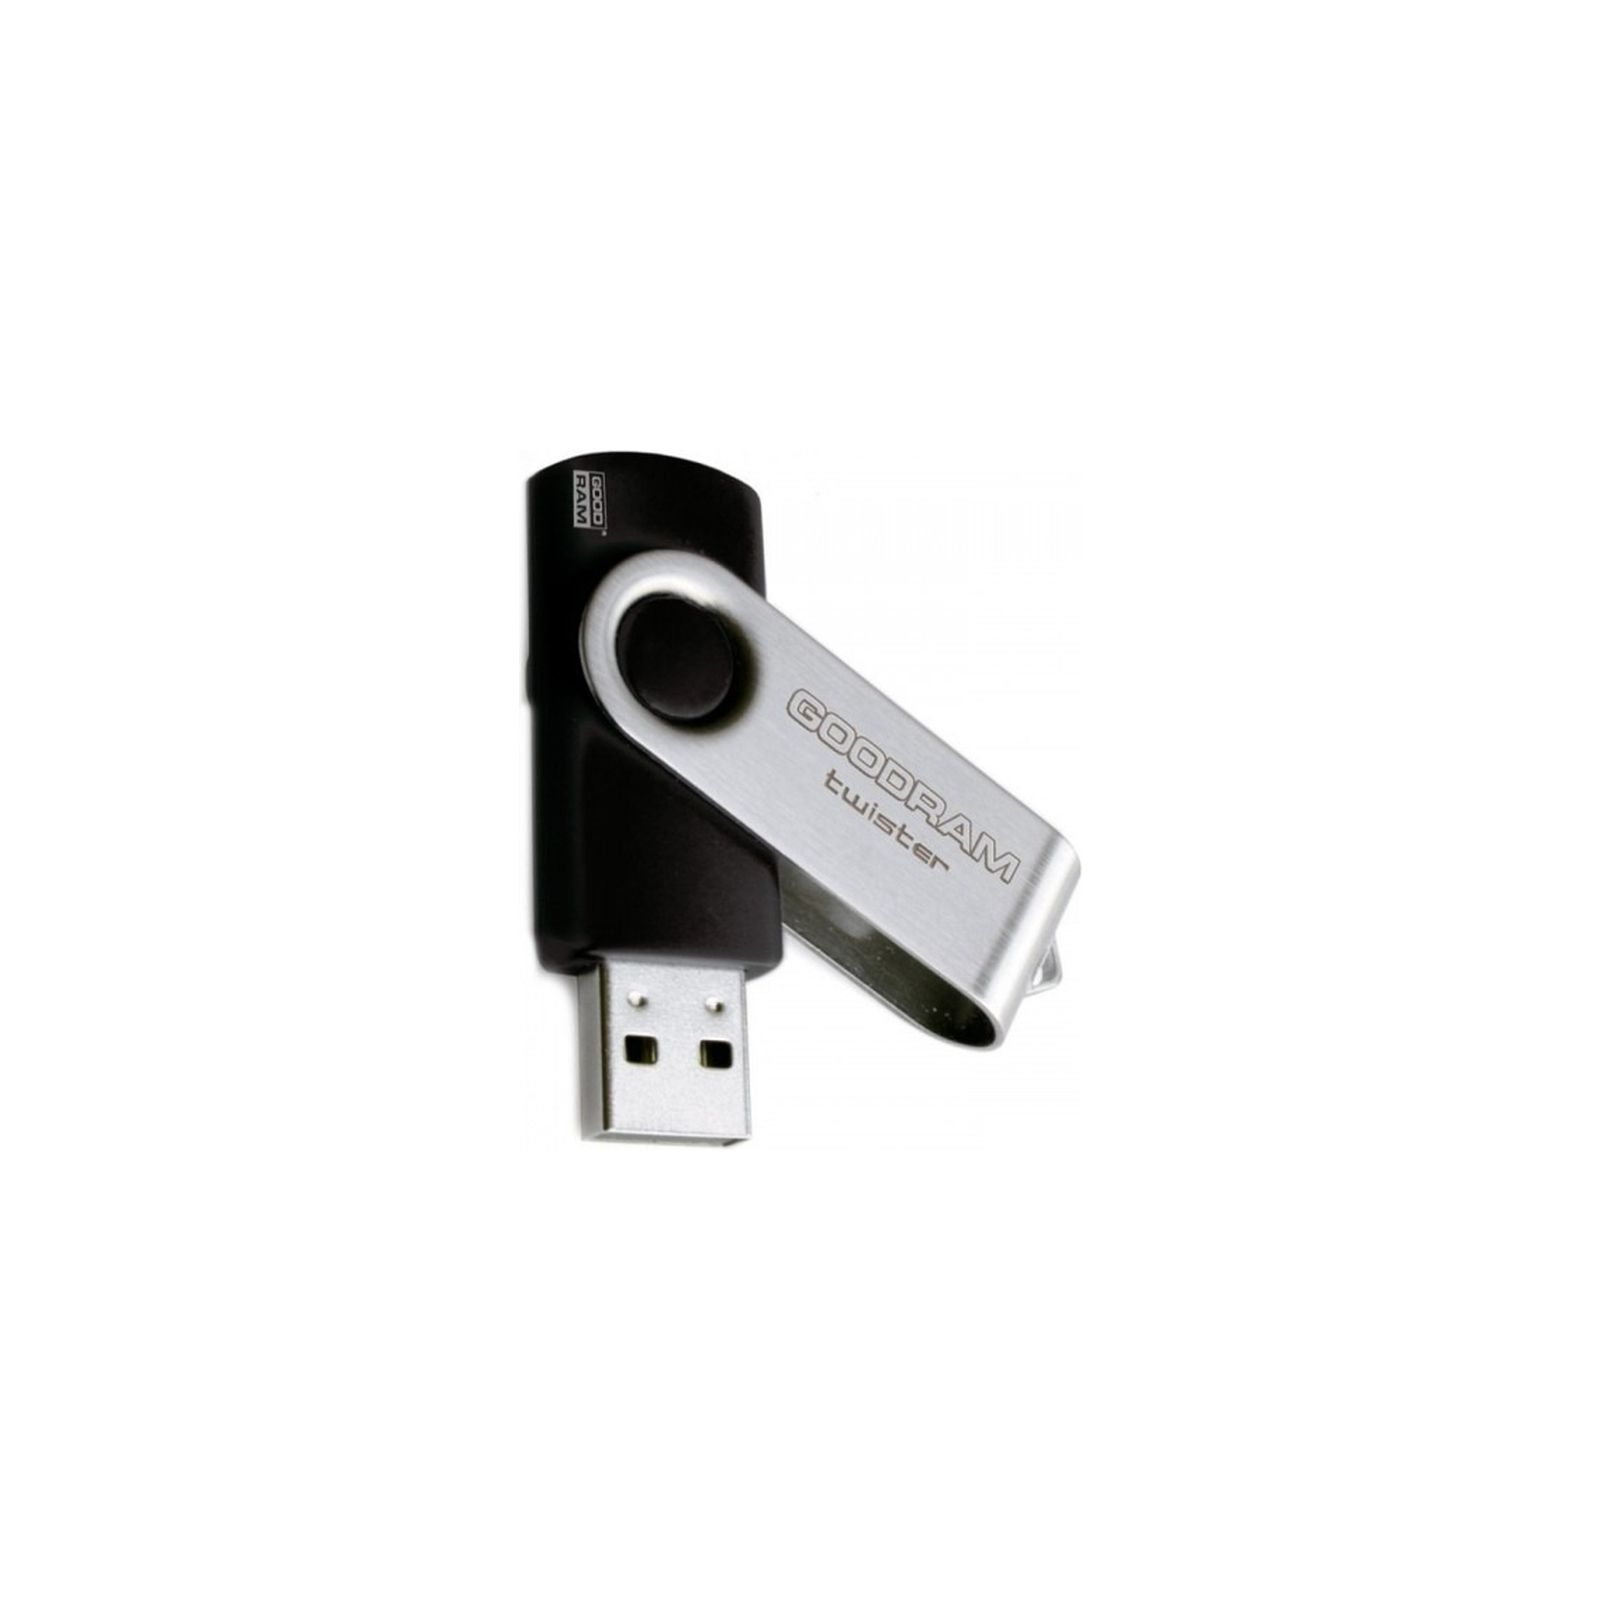 USB флеш накопитель Goodram 16GB Twister Black USB 2.0 (UTS2-0160K0R11) изображение 3